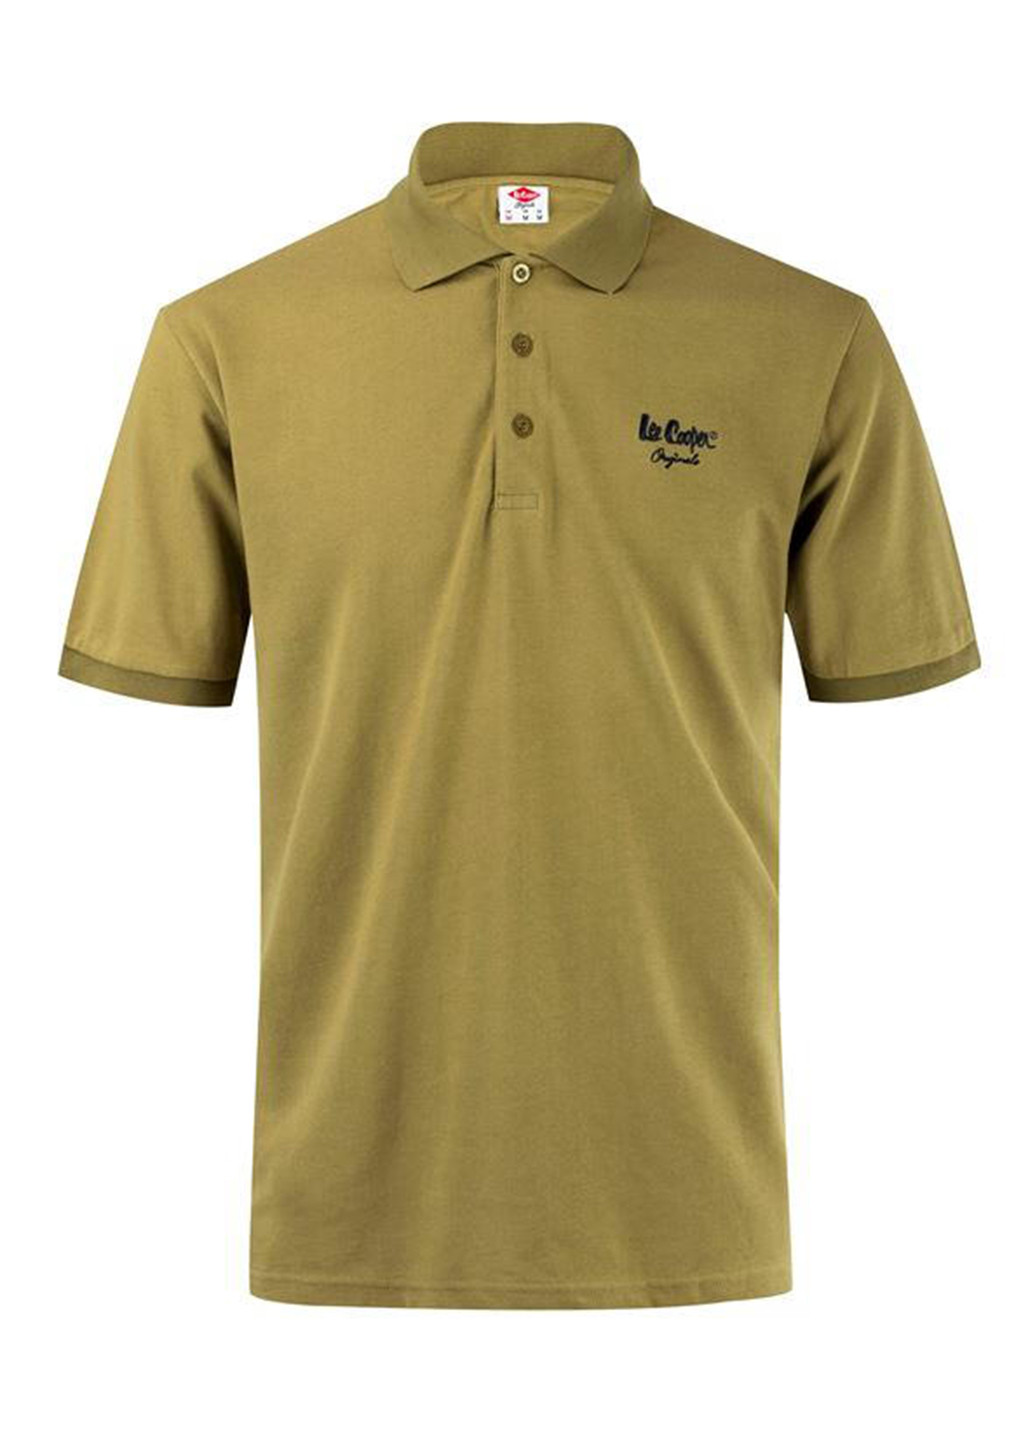 Оливковая футболка-поло для мужчин Lee Cooper с логотипом